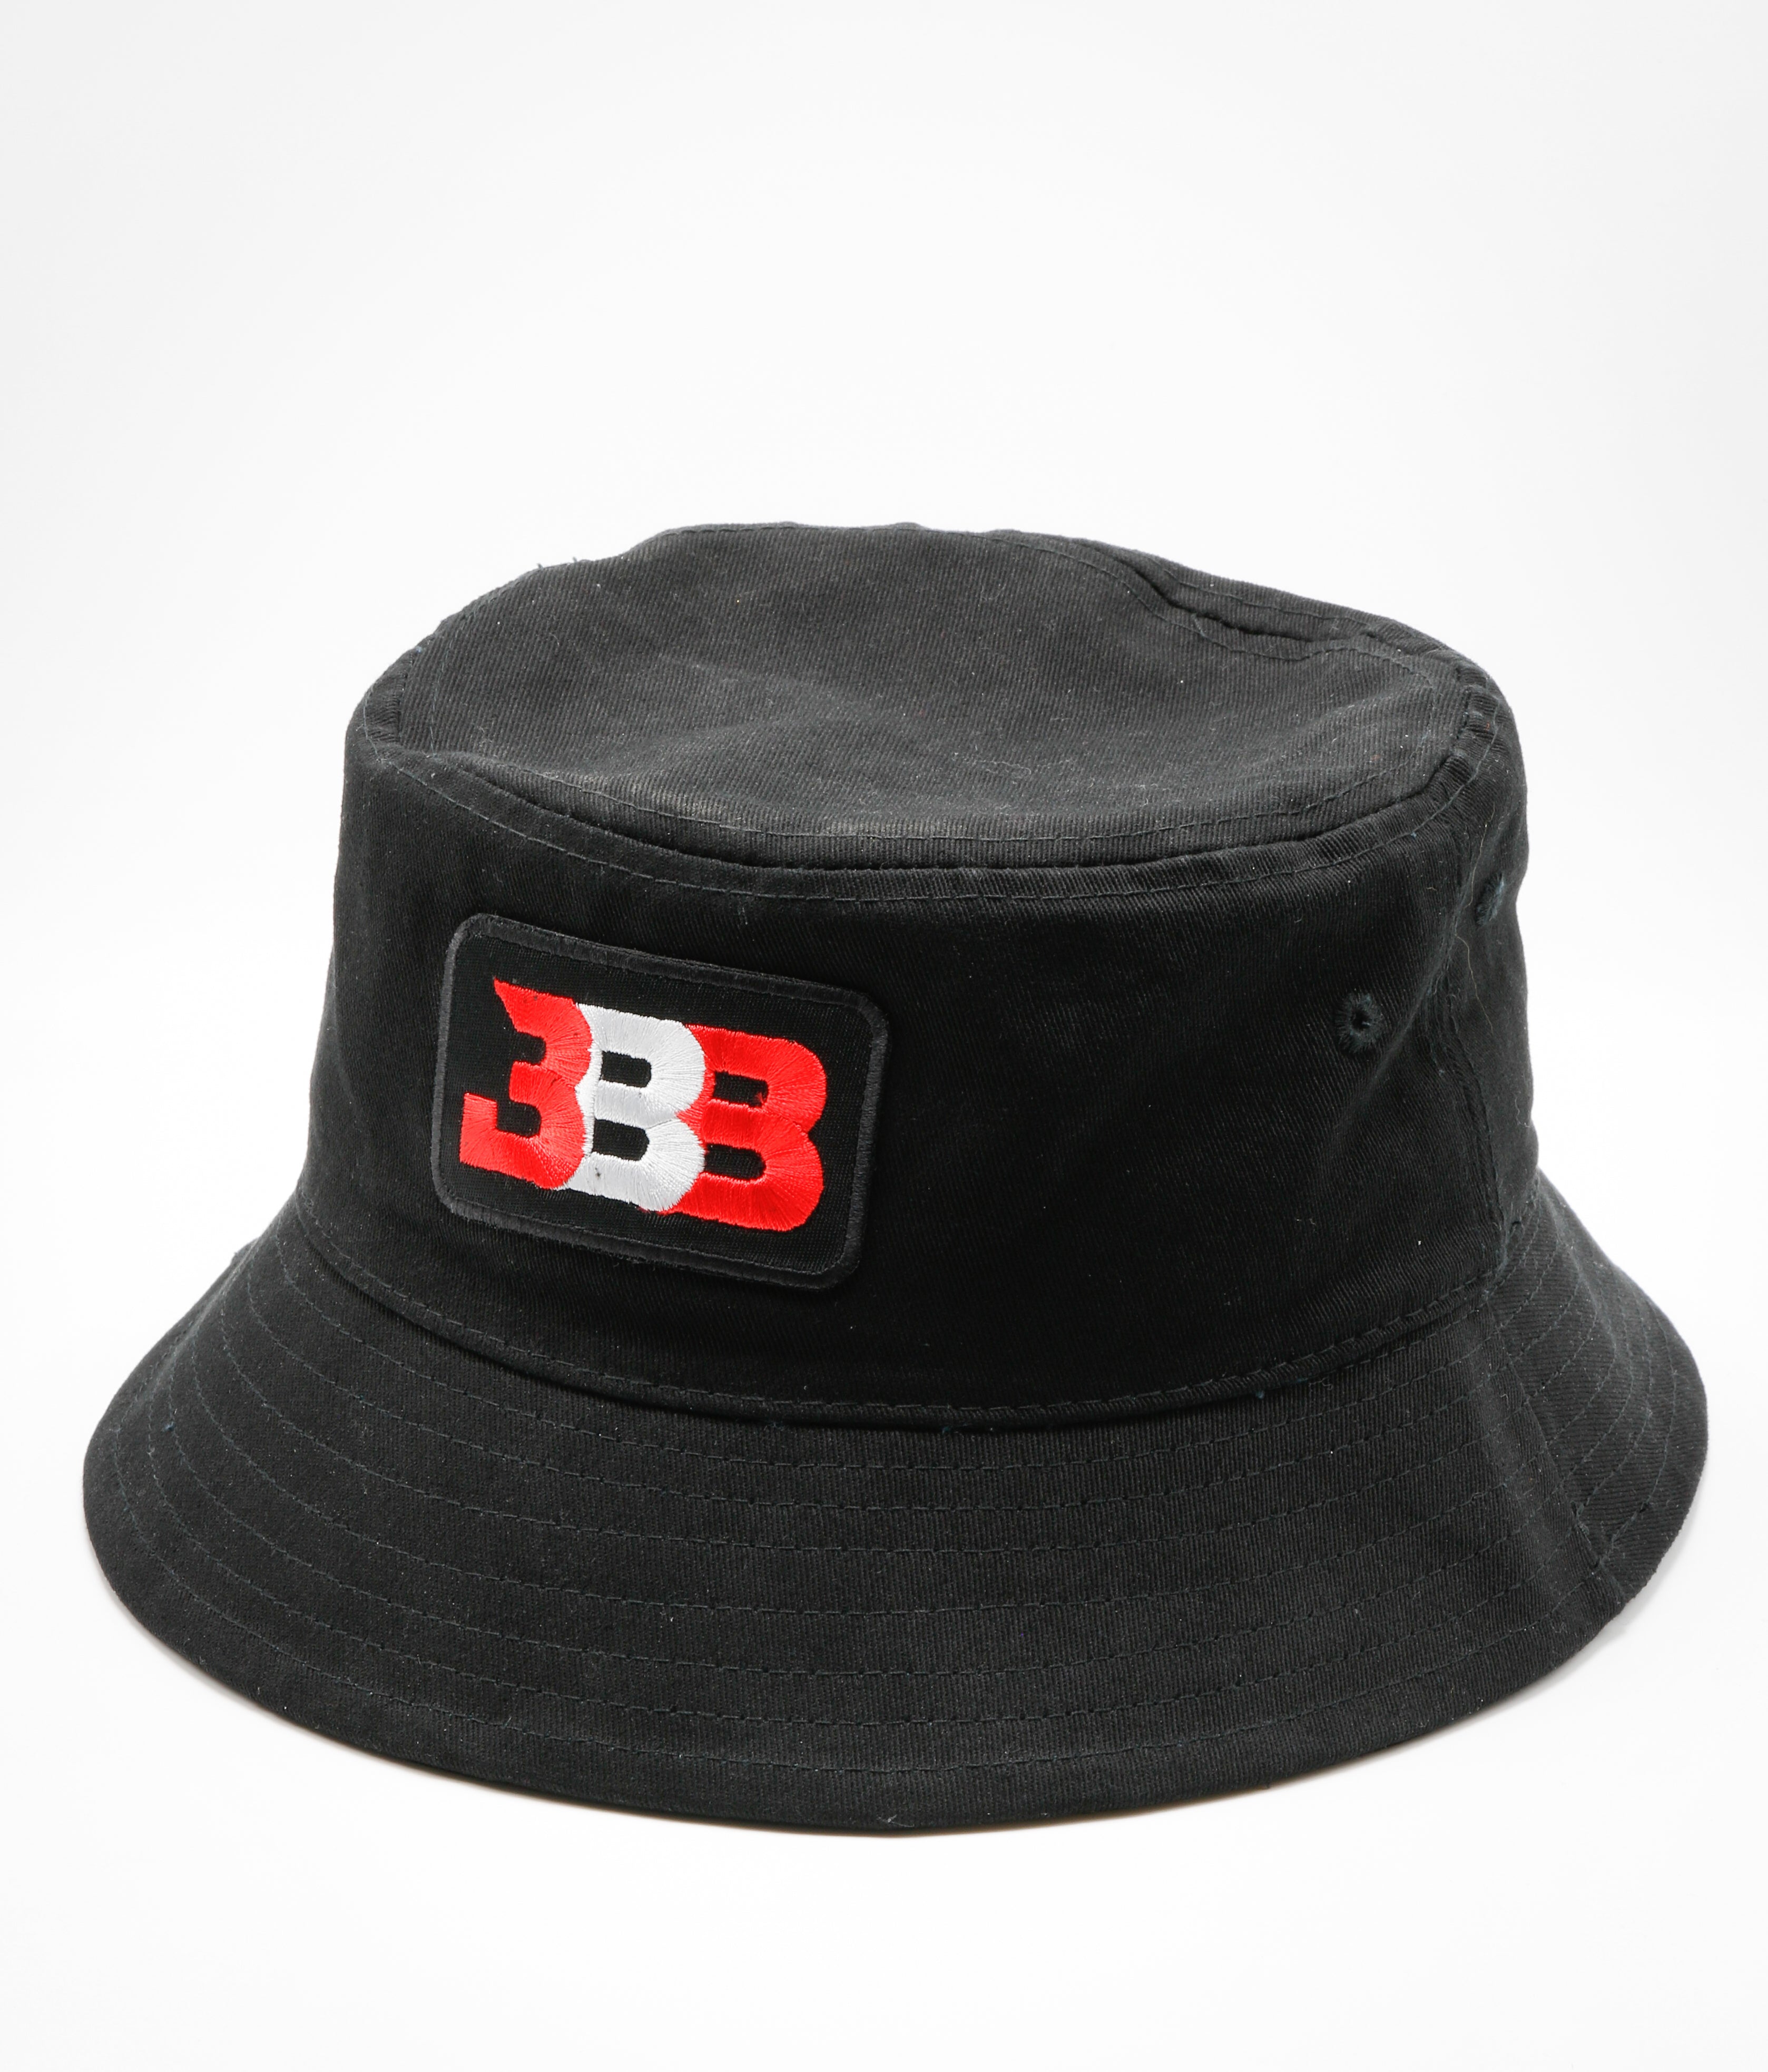 Lavar's Bucket Hat – Big Baller Brand